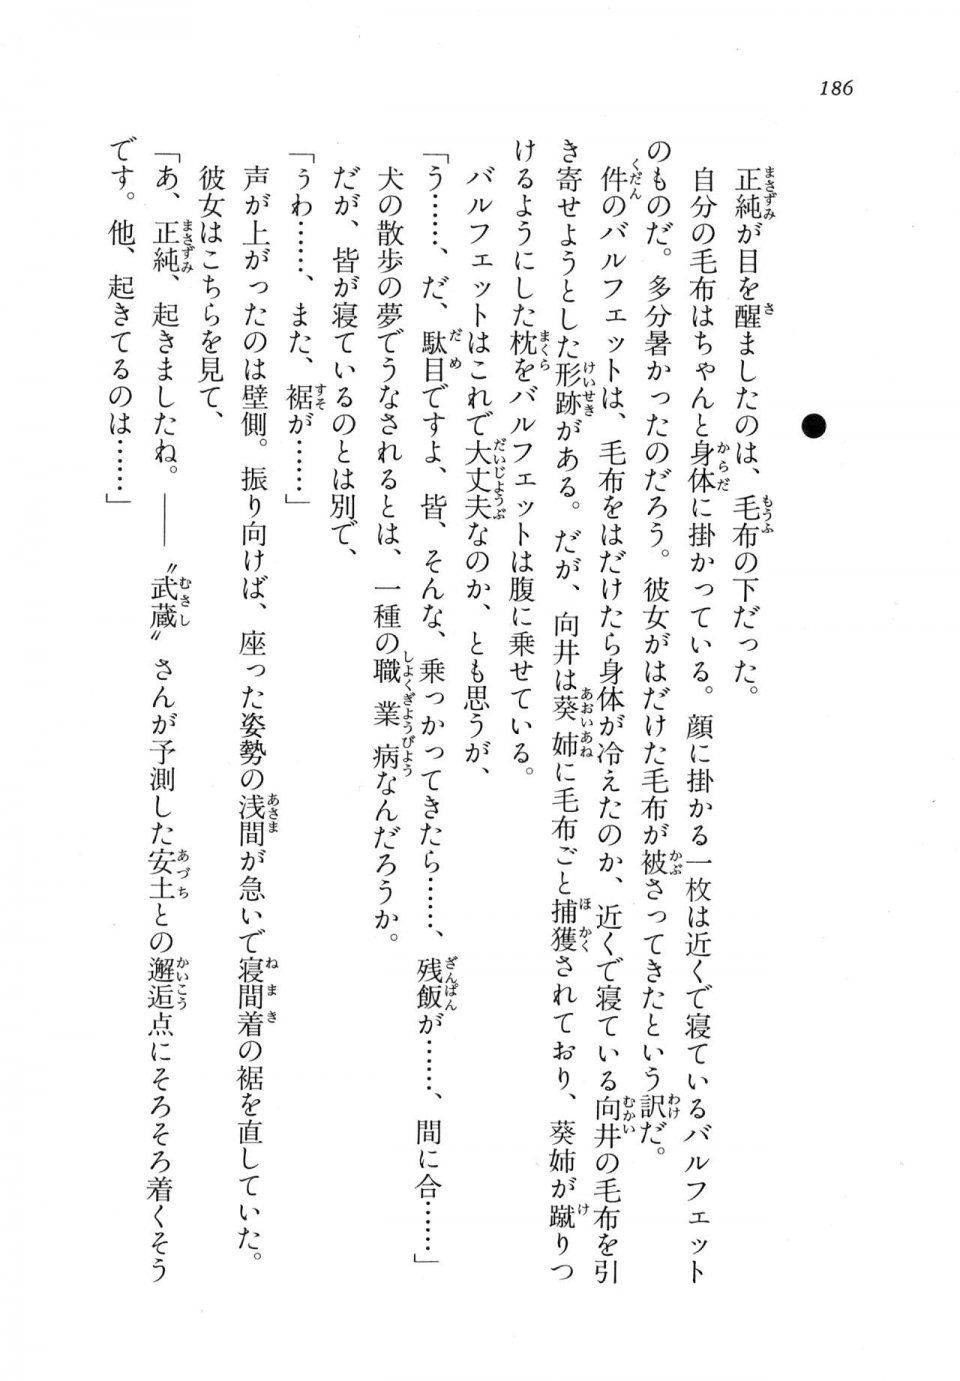 Kyoukai Senjou no Horizon LN Vol 18(7C) Part 1 - Photo #186